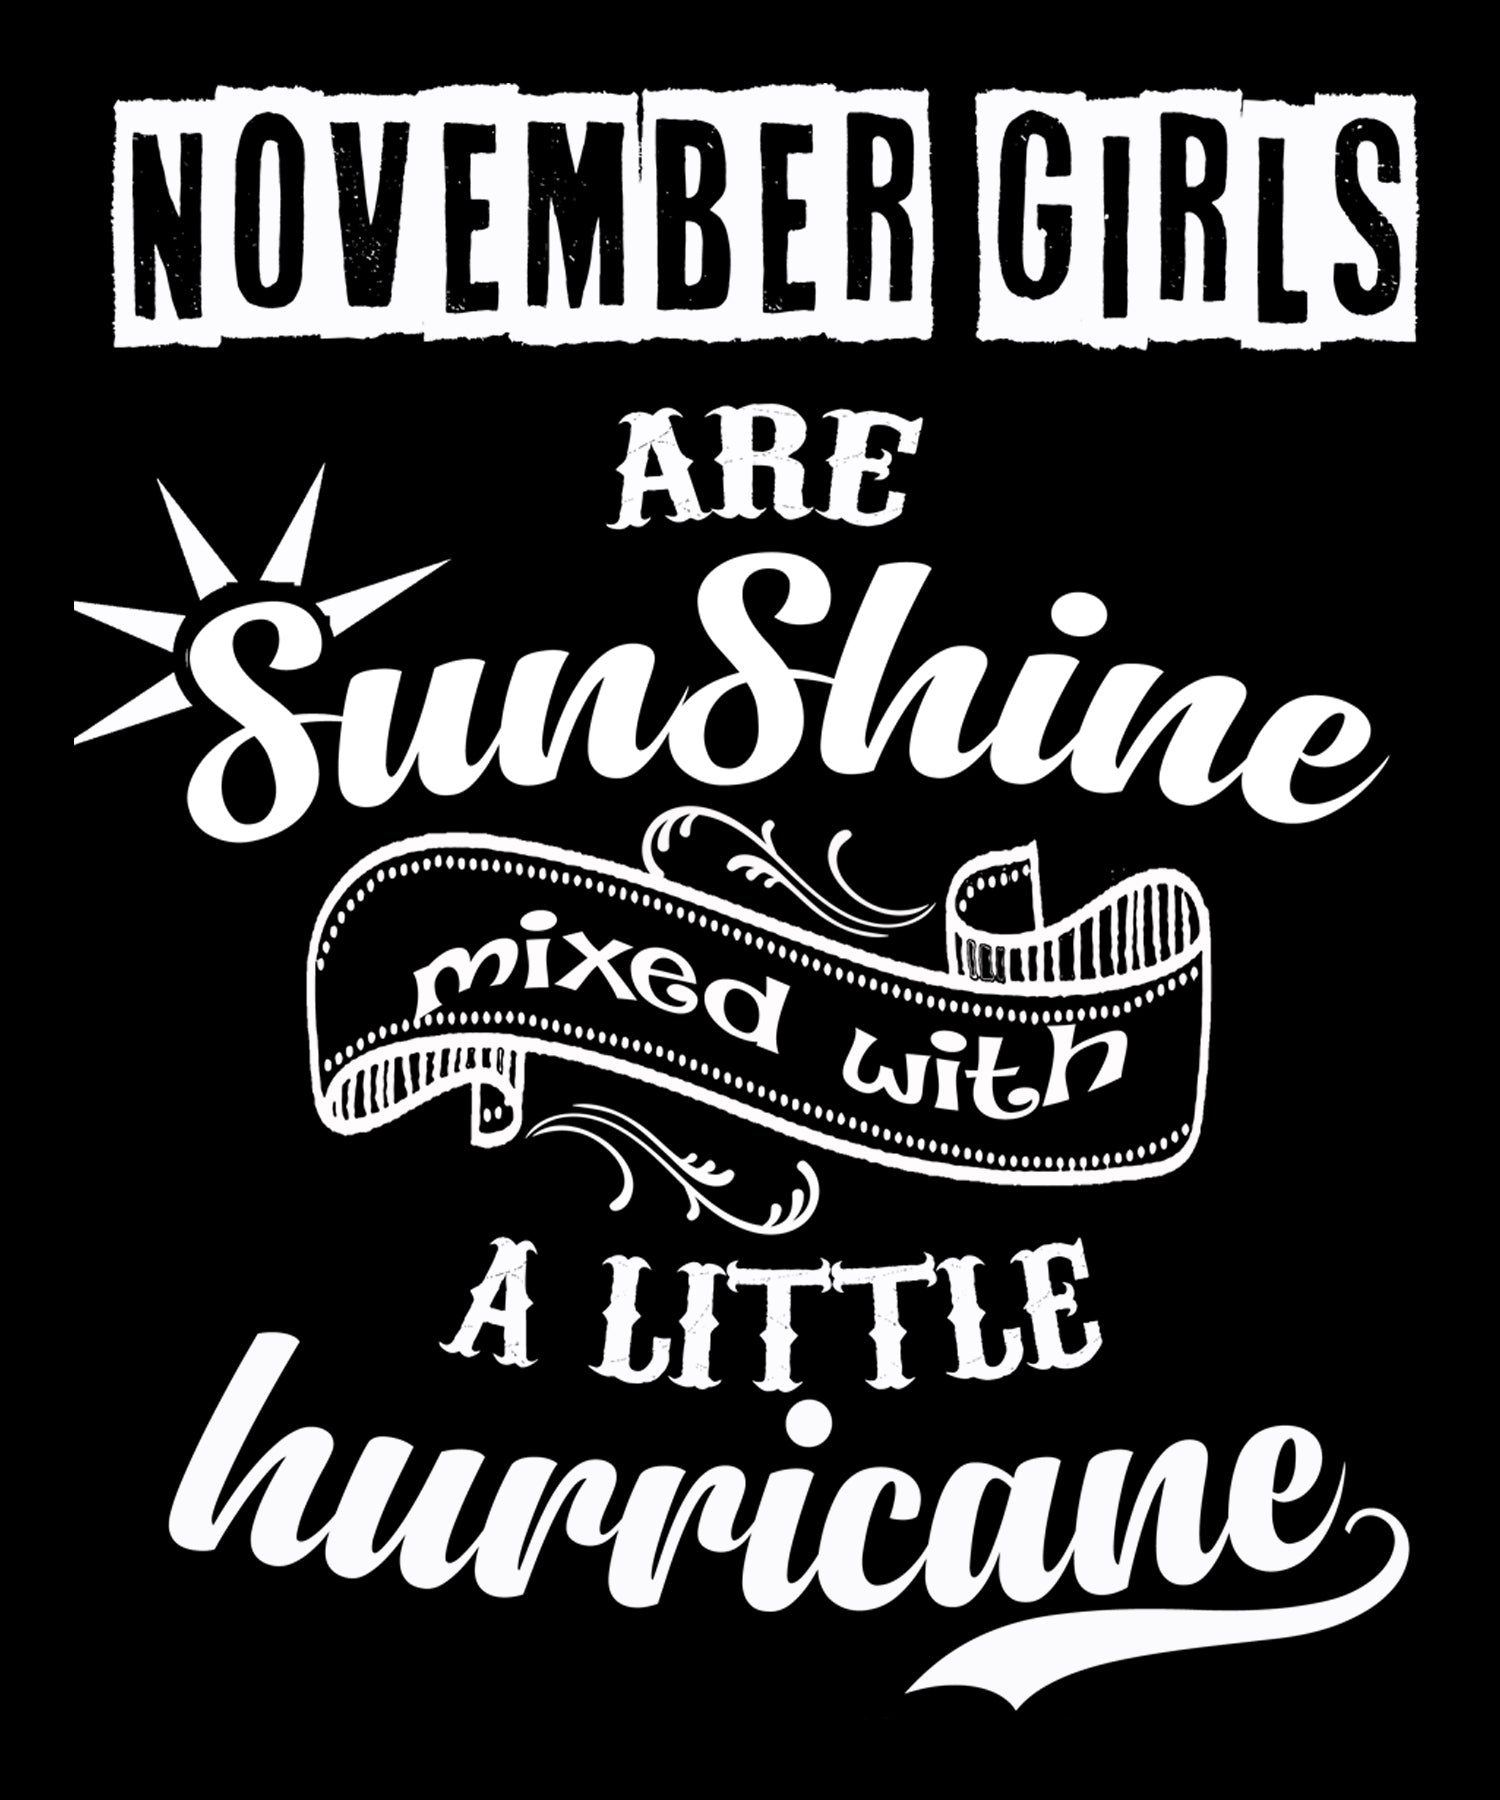 "November Girls Are Sunshine Mixed With Hurricane"